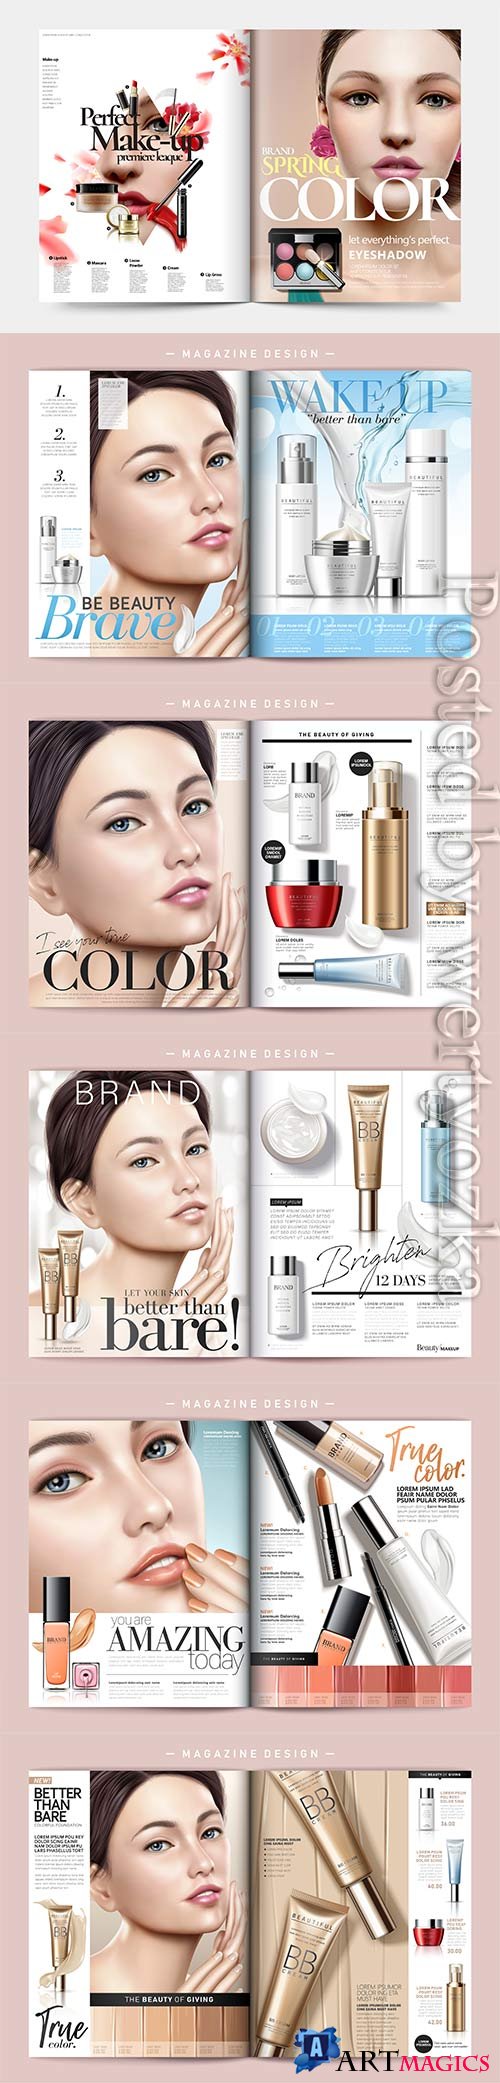 Skin care magazine vector template